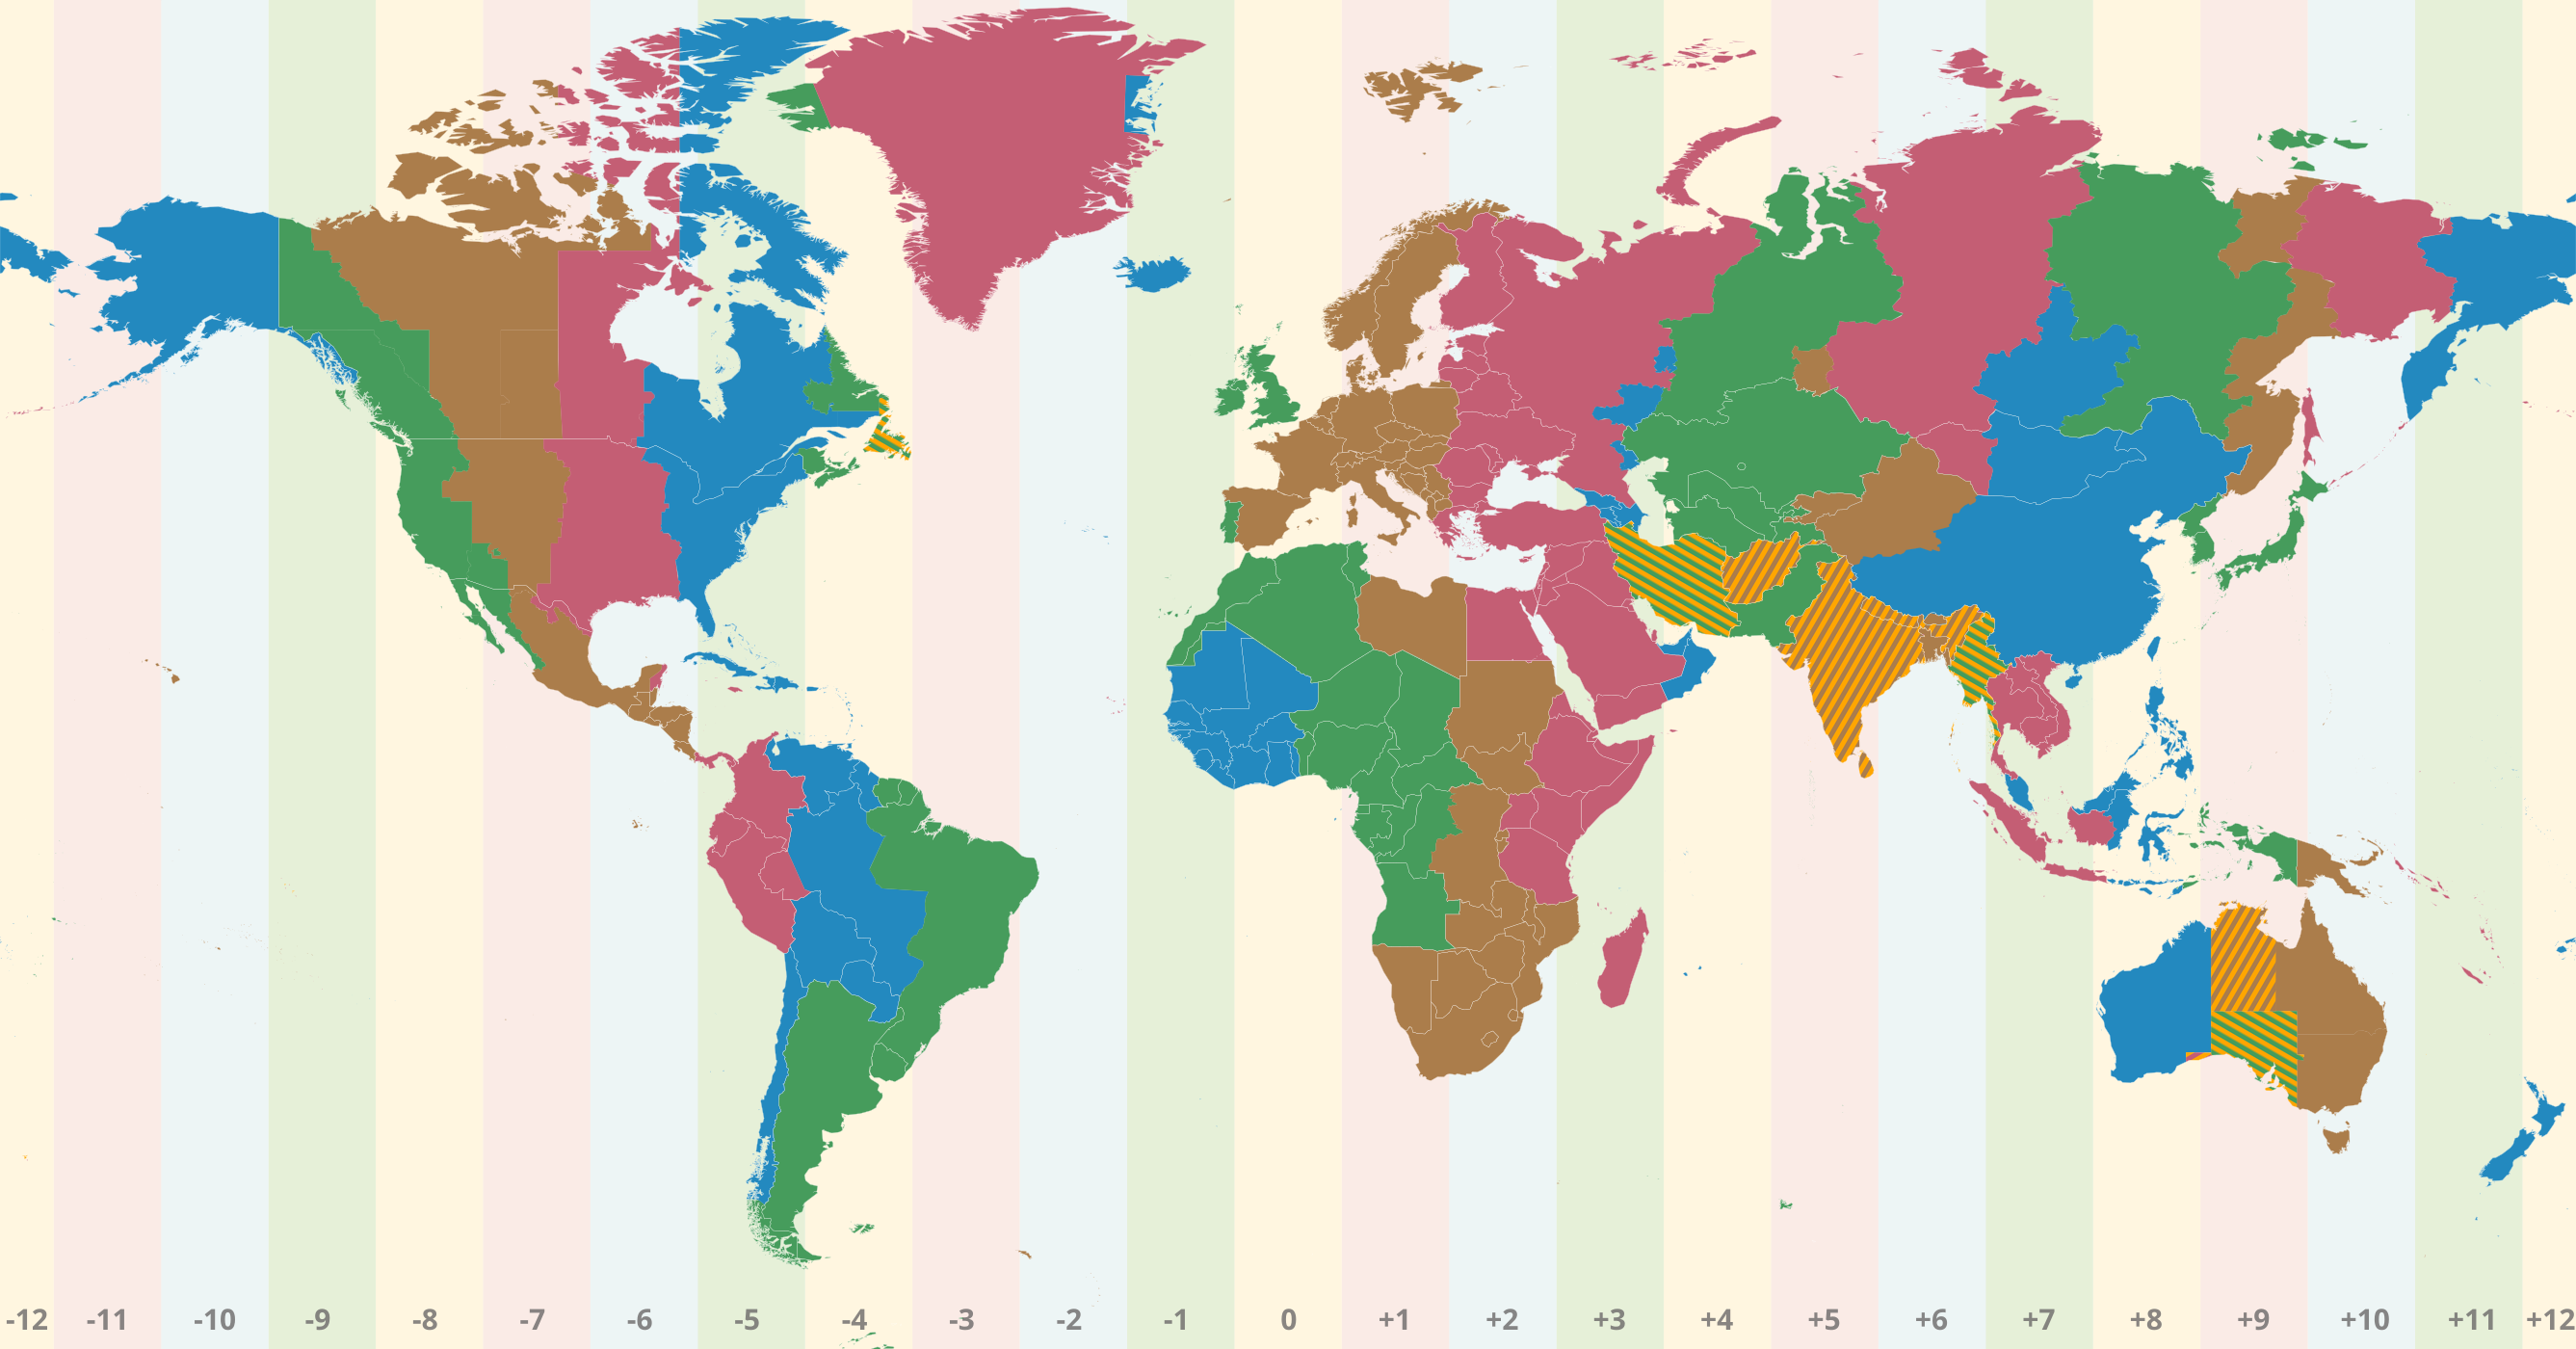 Mapa del mundo con la zona horaria UTC-6 resaltada